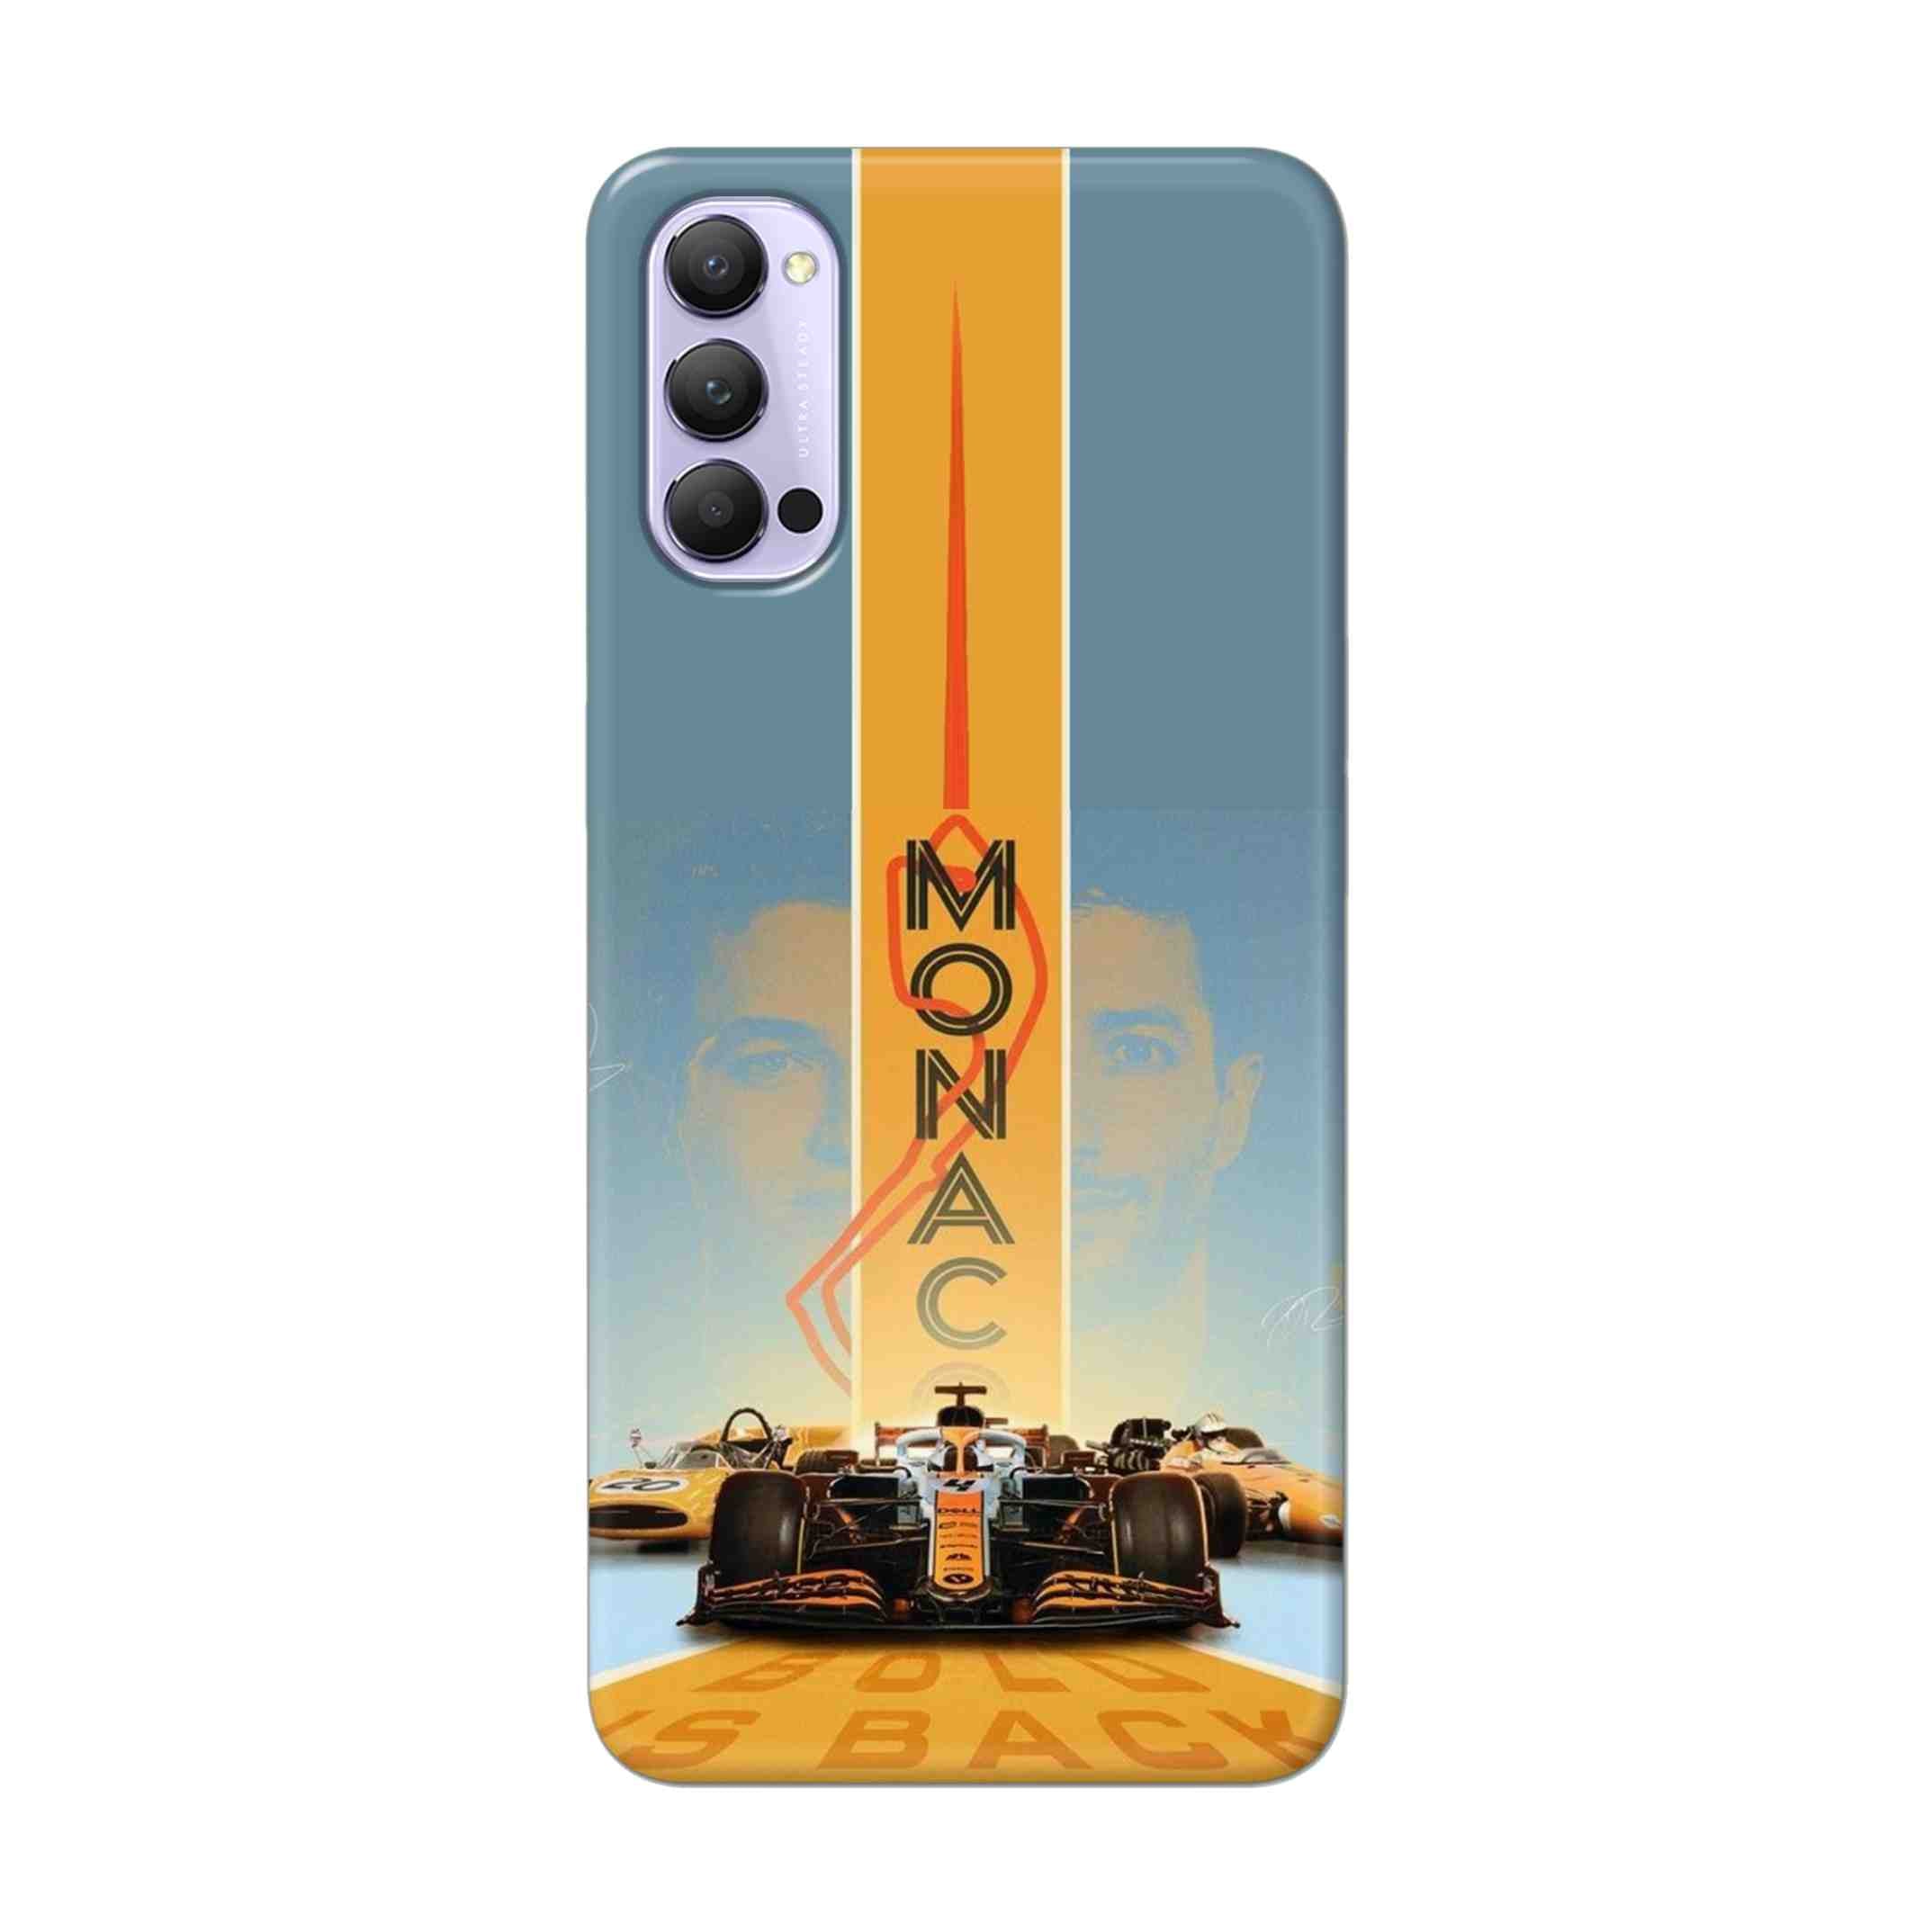 Buy Monac Formula Hard Back Mobile Phone Case Cover For Oppo Reno 4 Pro Online